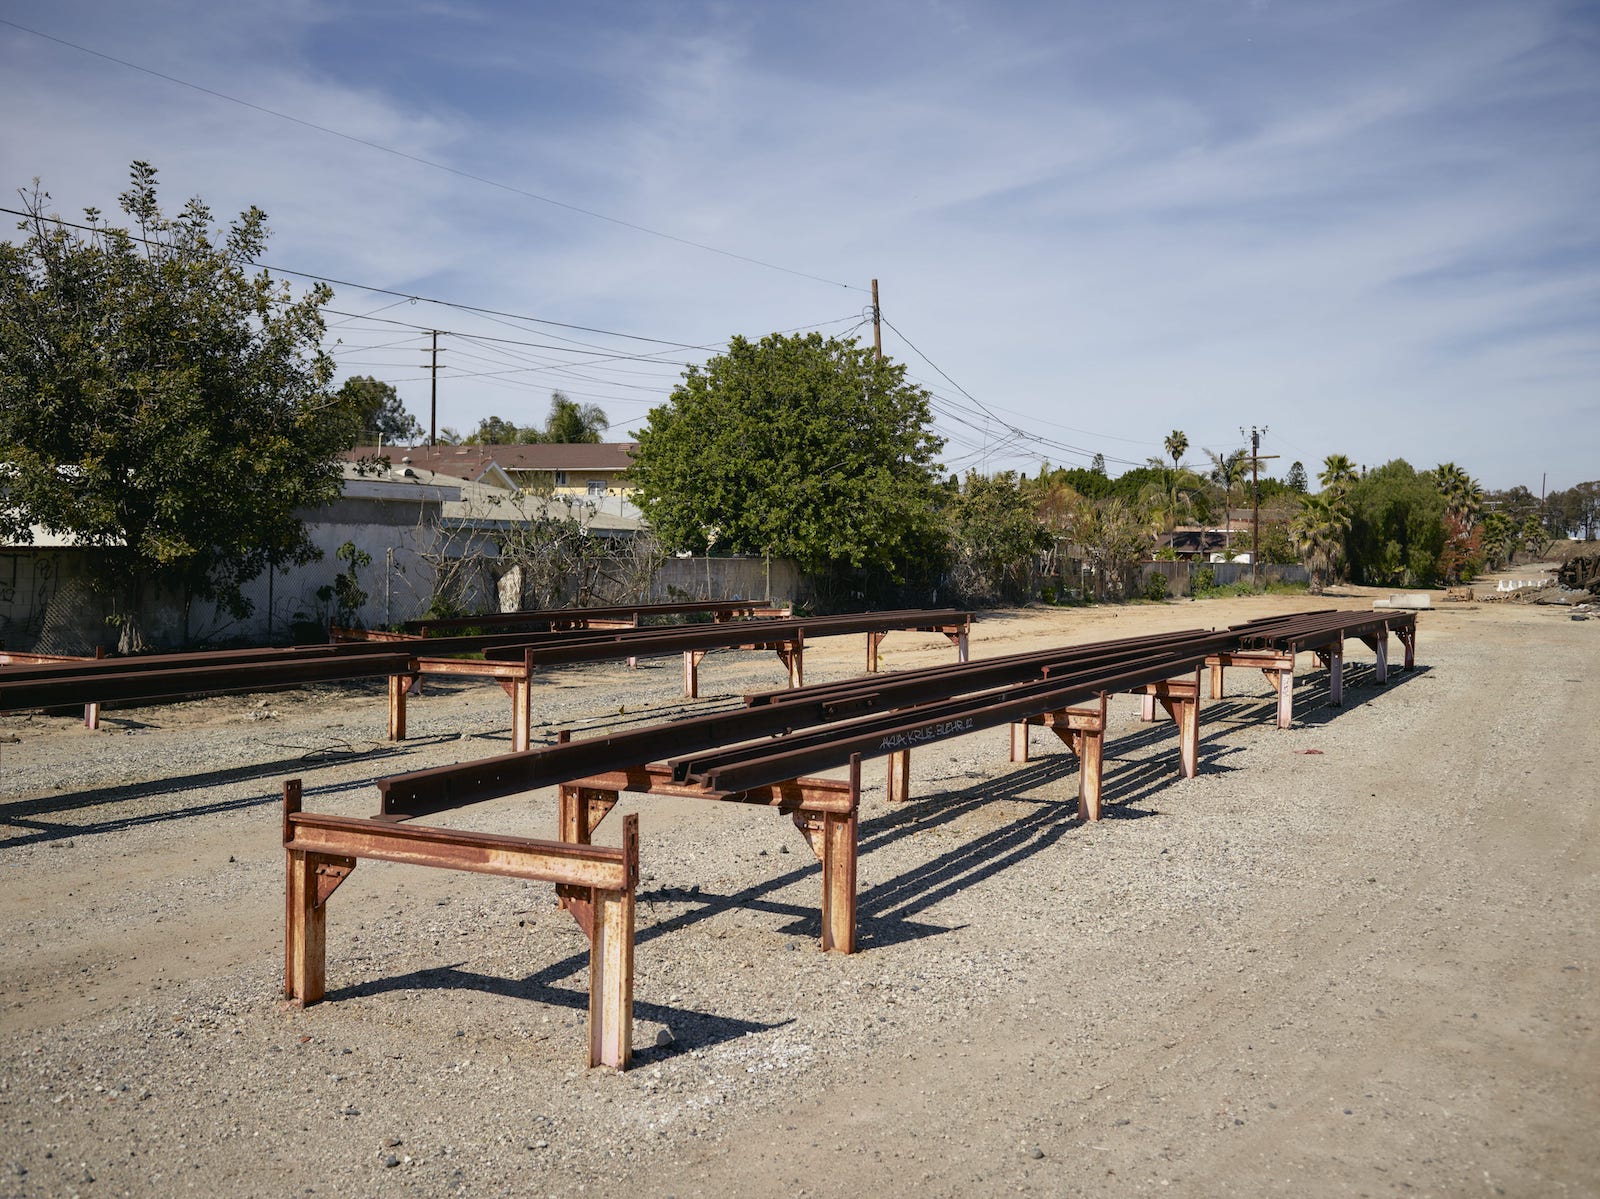 railroad tracks on raised platform pillars near backyards